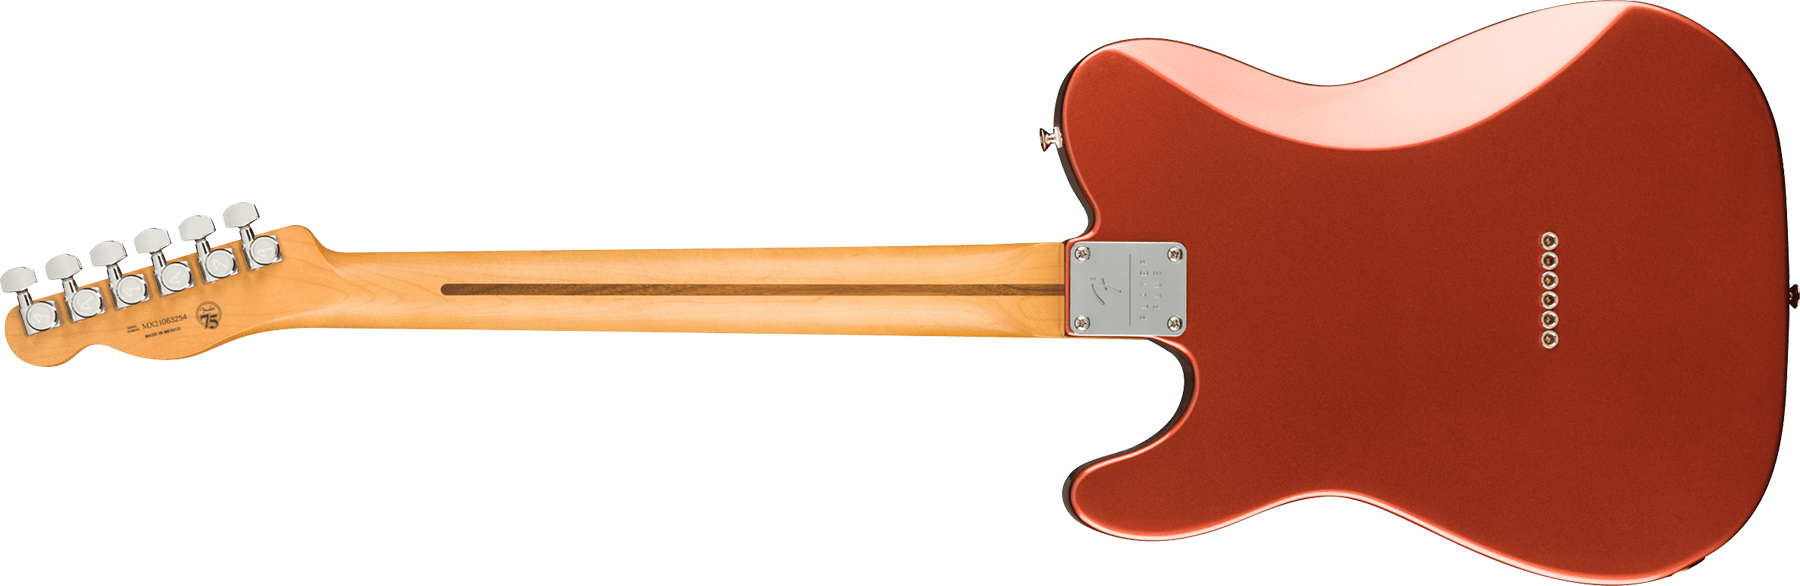 Fender Tele Player Plus Nashville Mex 3s Ht Pf - Aged Candy Apple Red - E-Gitarre in Teleform - Variation 1